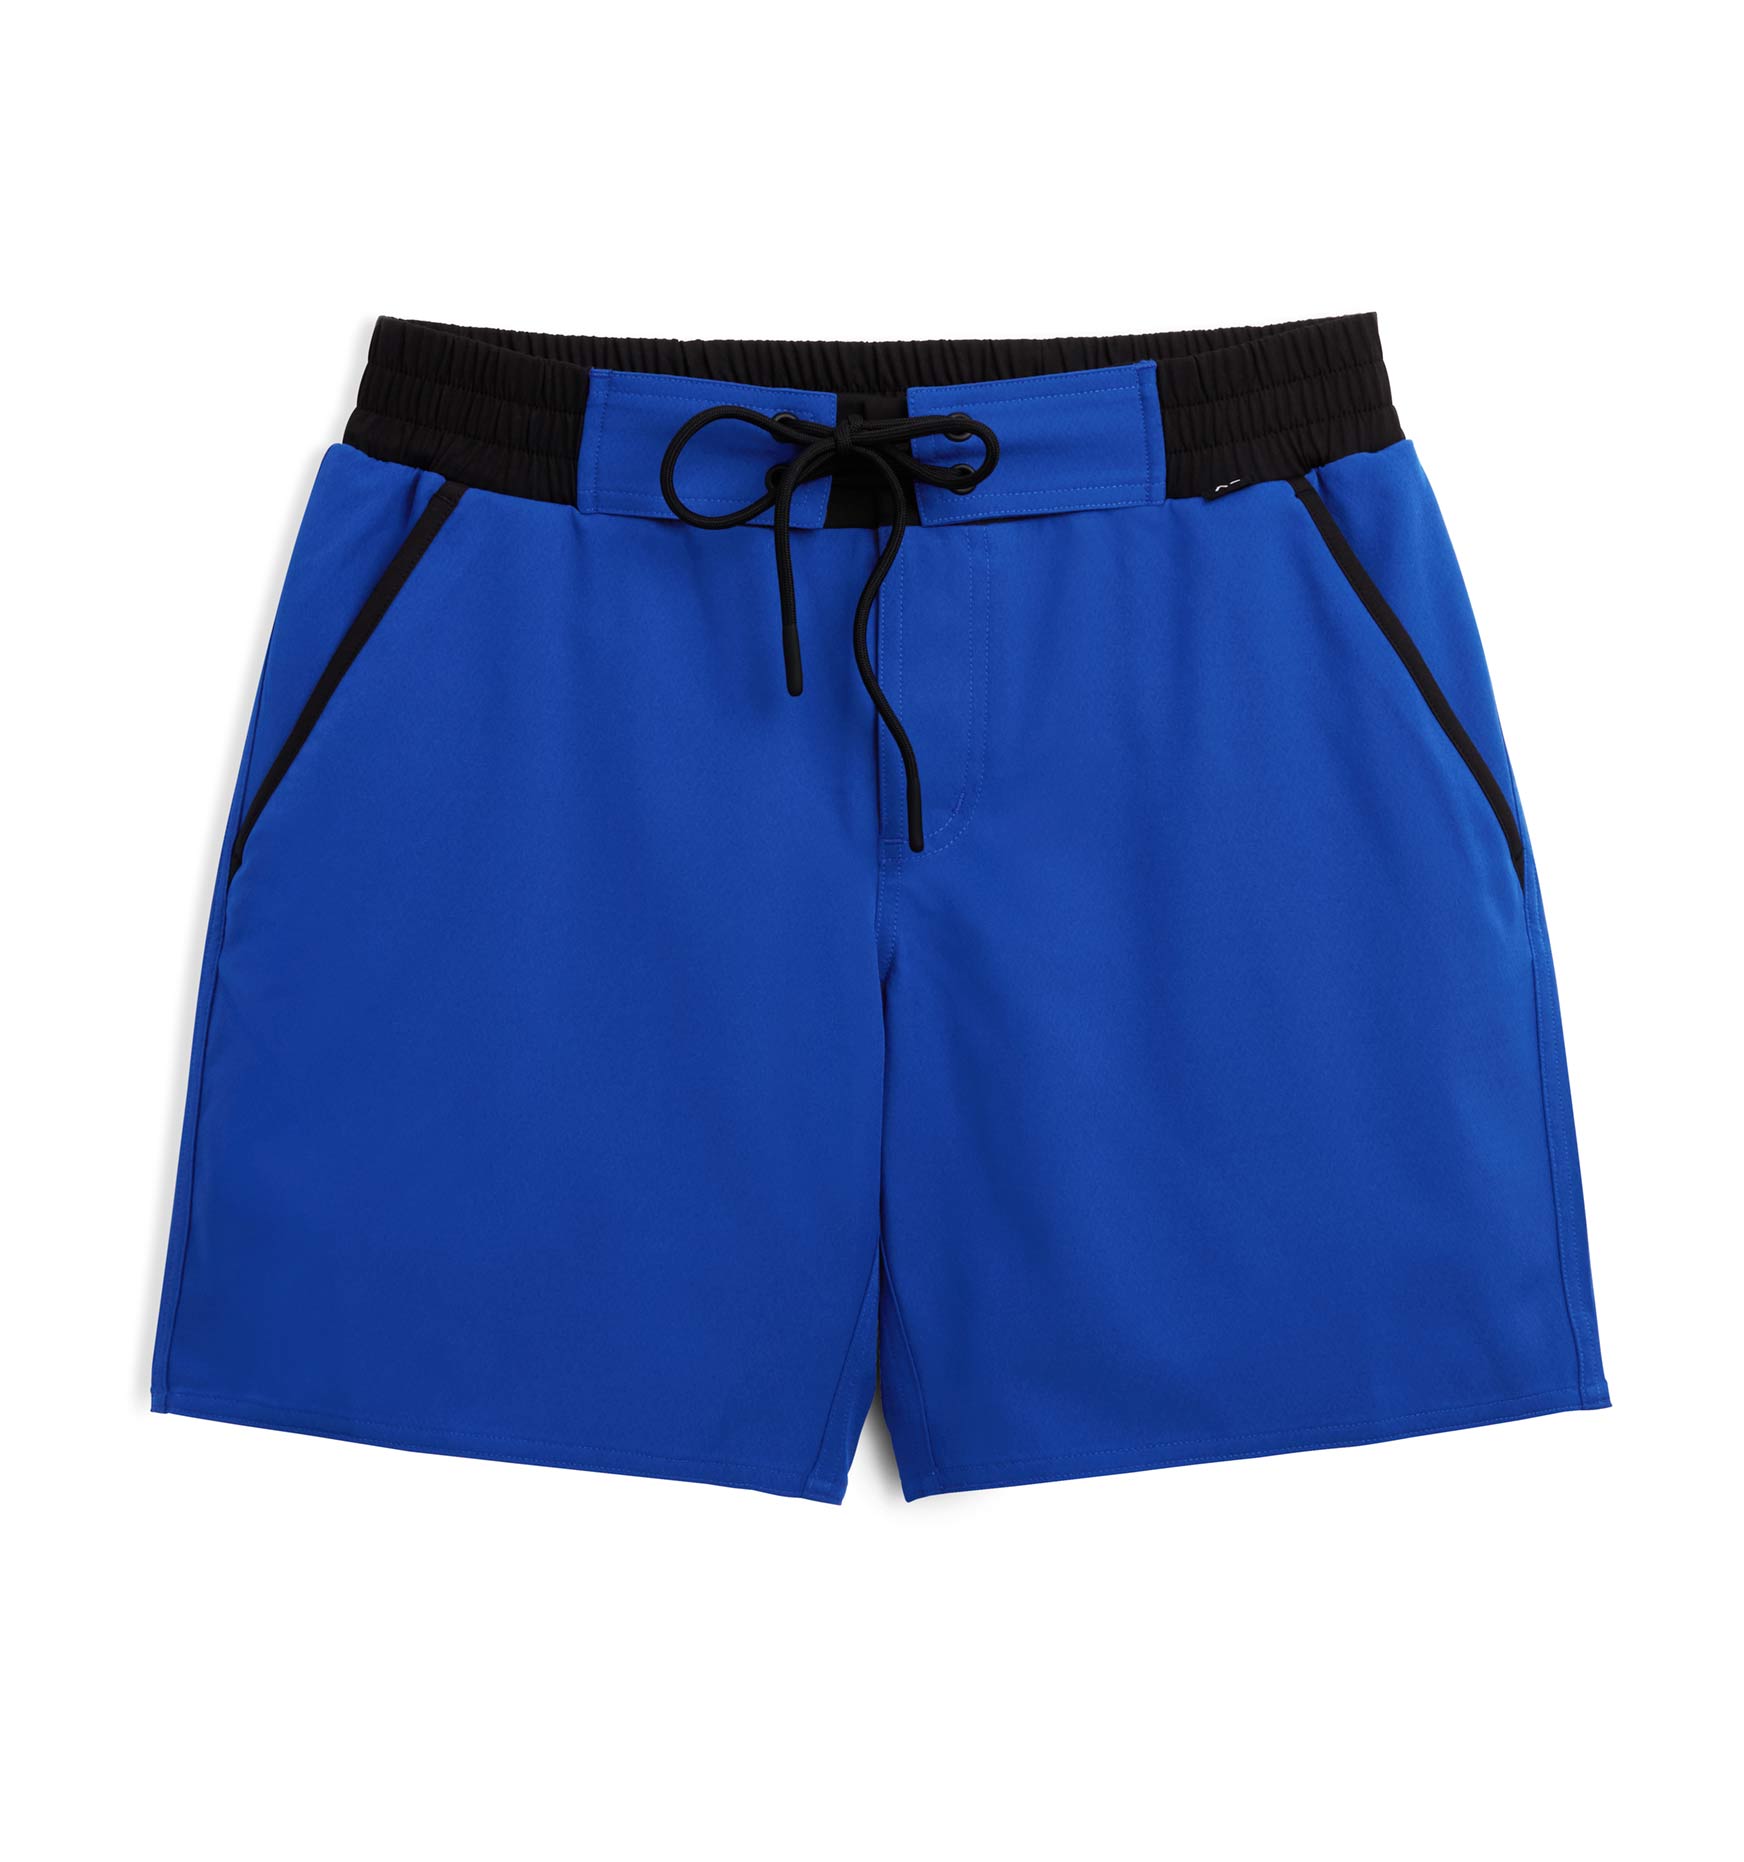 Swimwear: Unisuits, Swim Tanks & Shorts | TomboyX